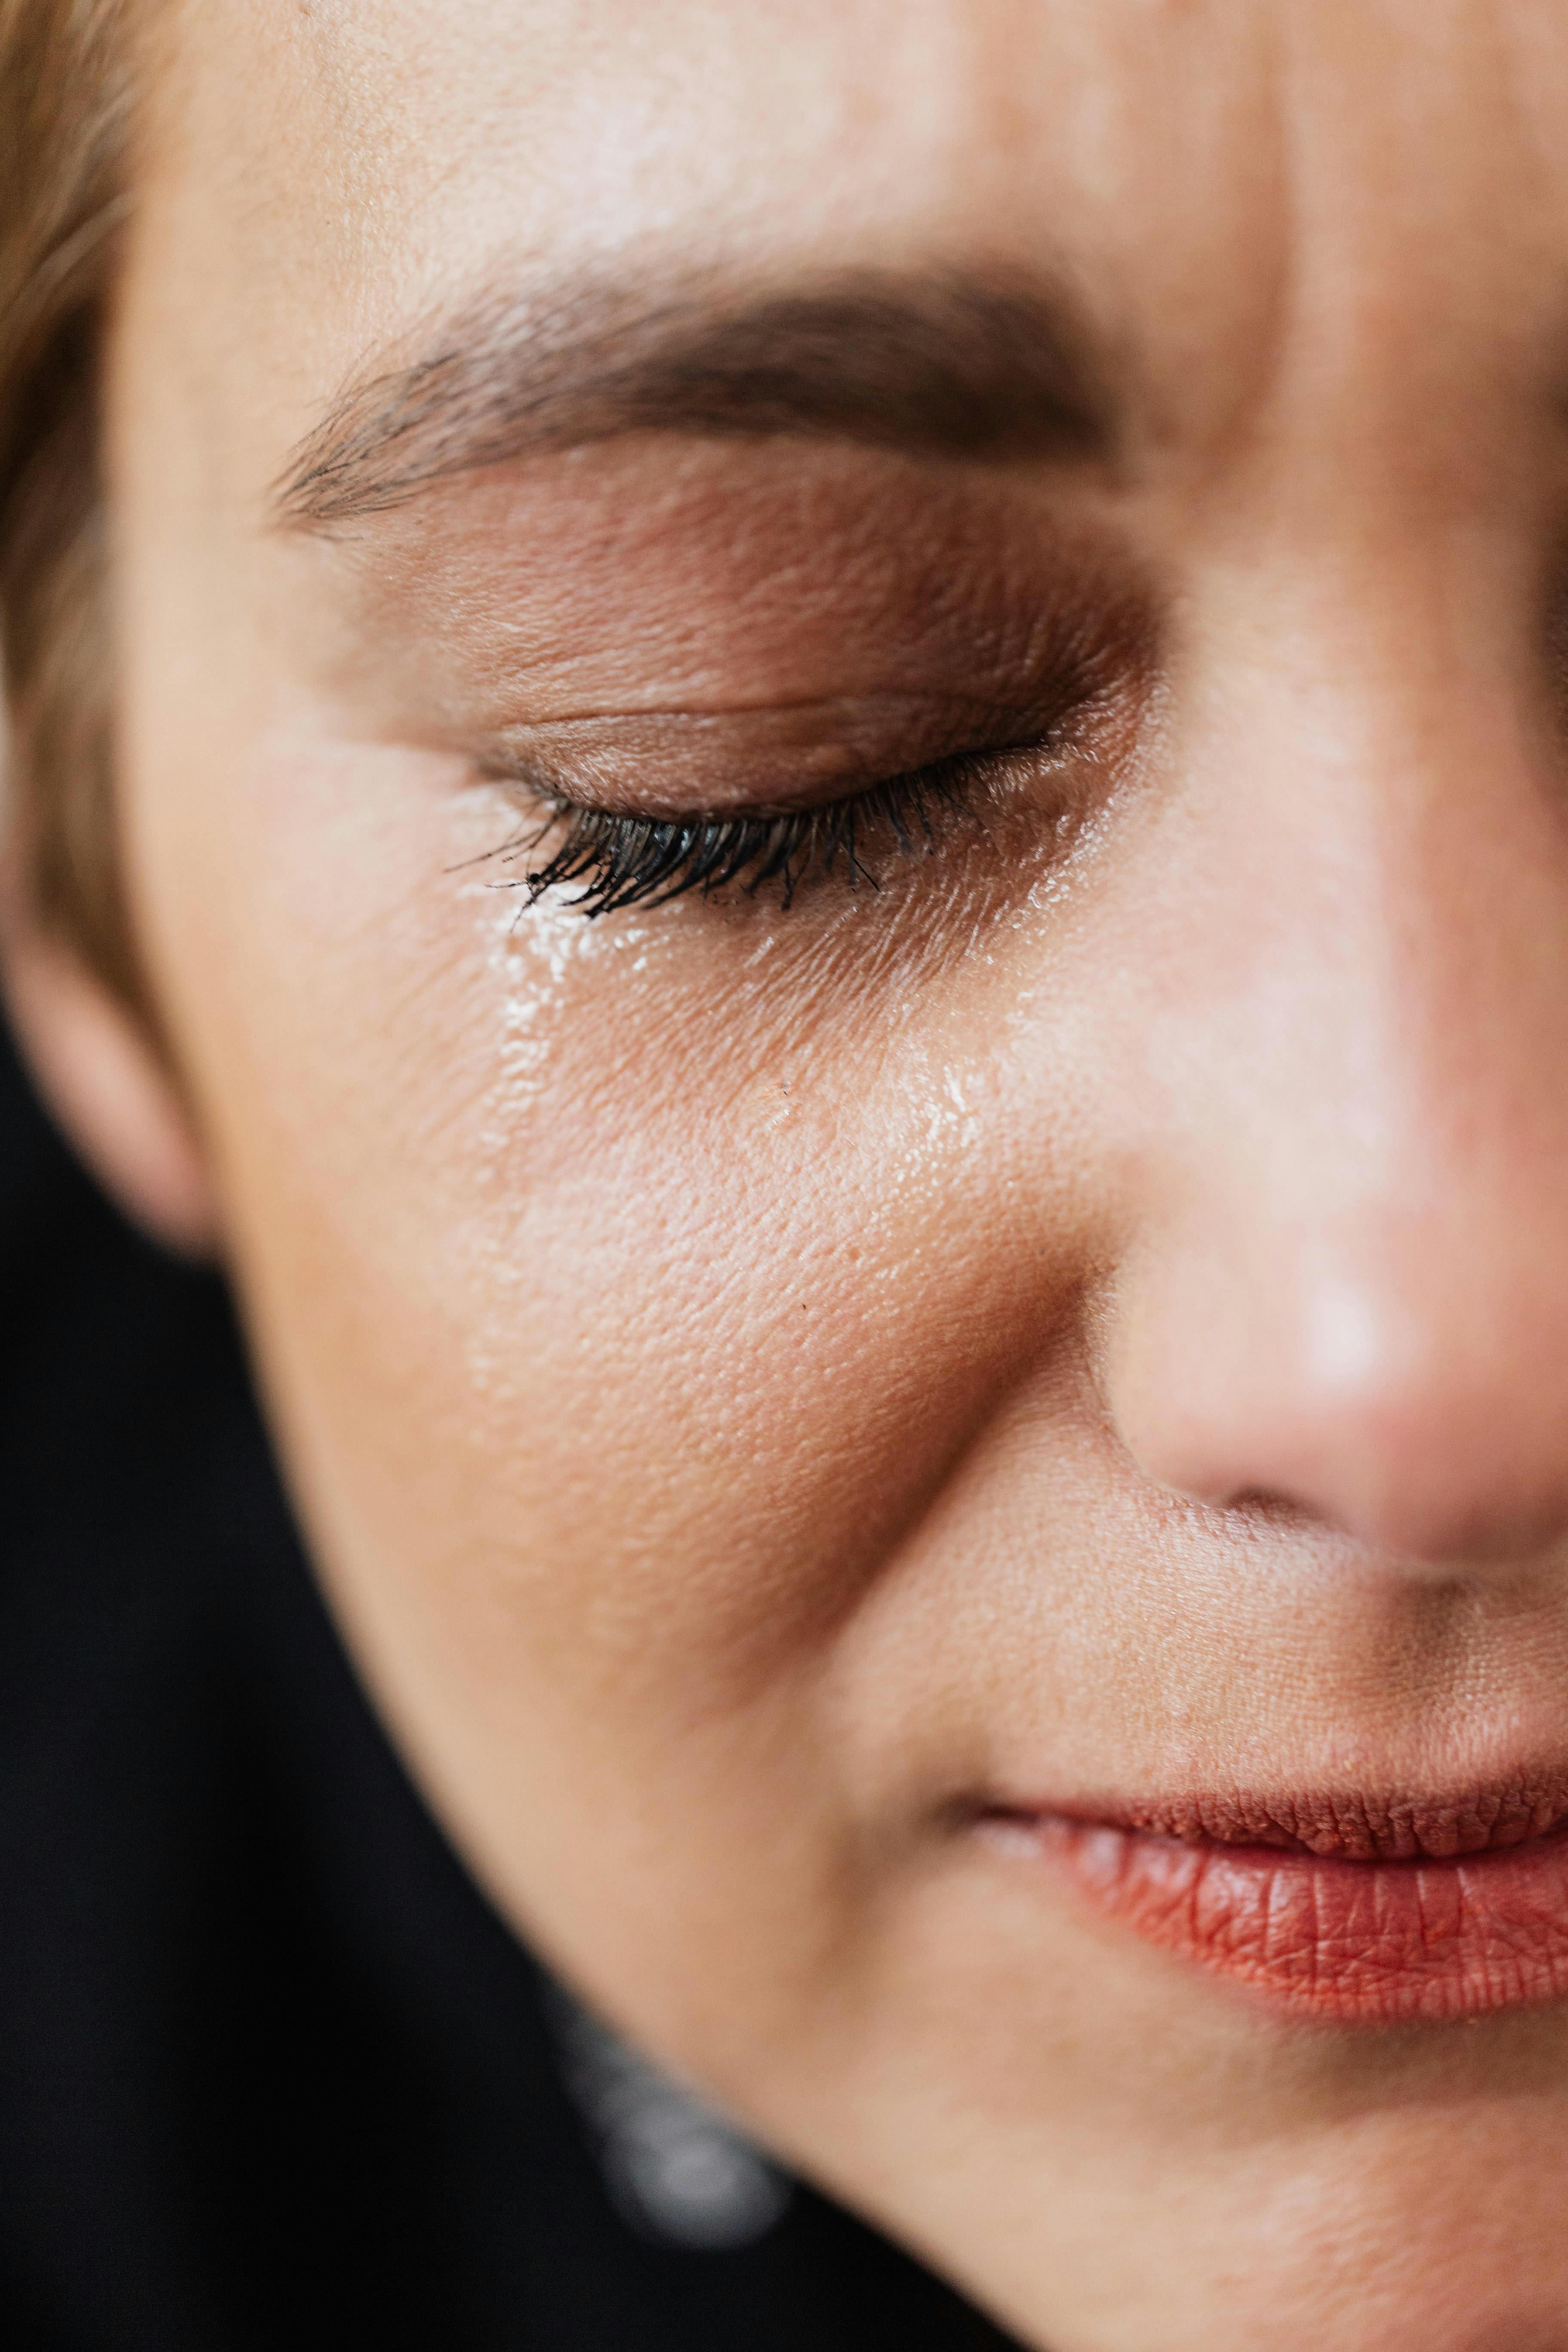 Tearful woman | Source: Pexels